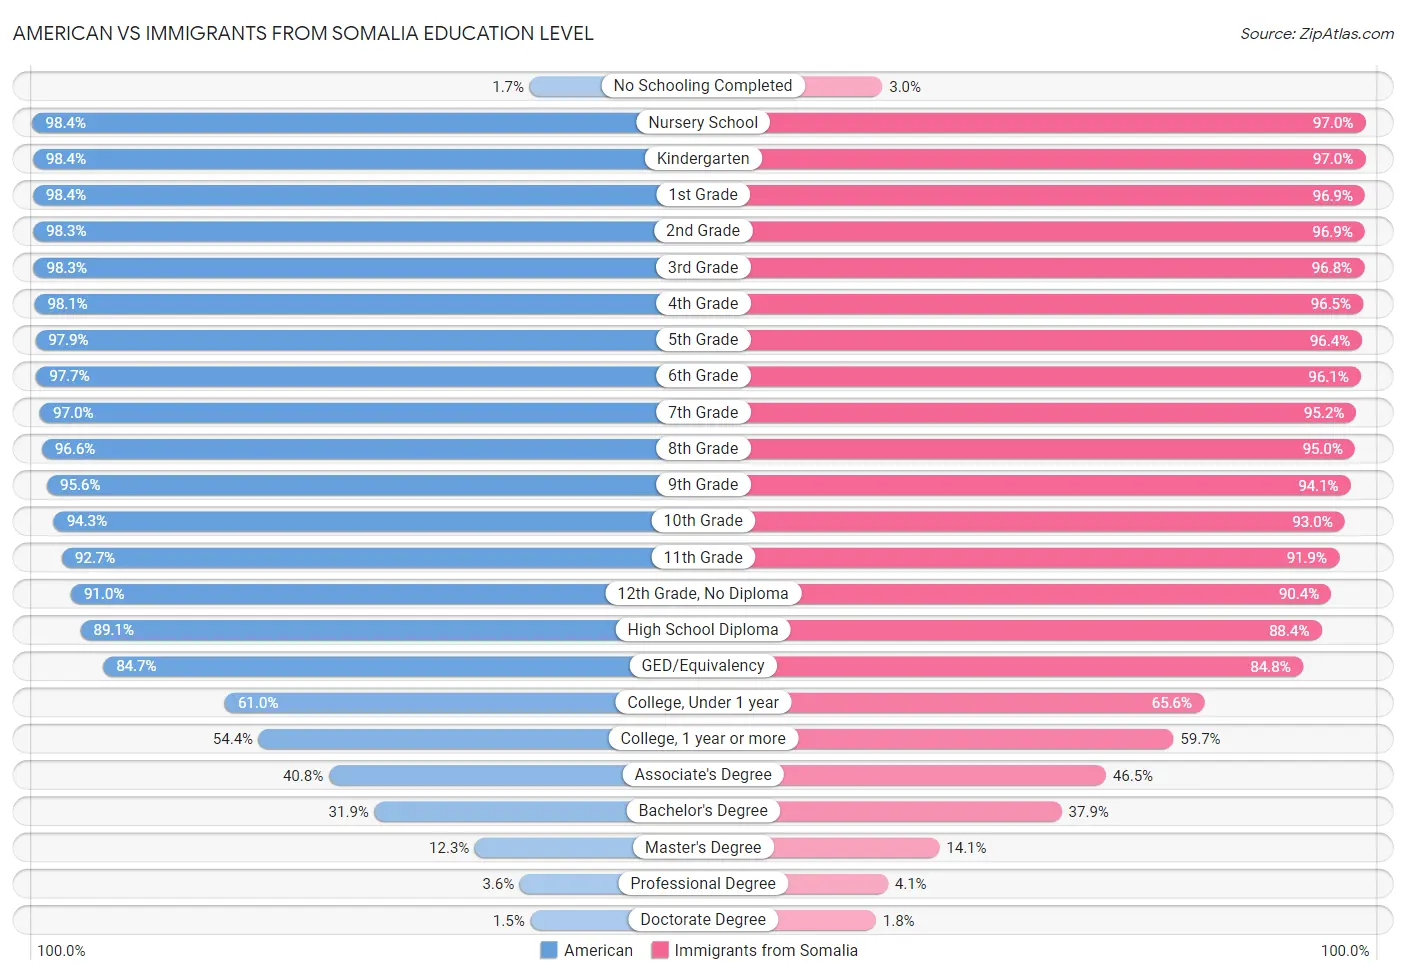 American vs Immigrants from Somalia Education Level